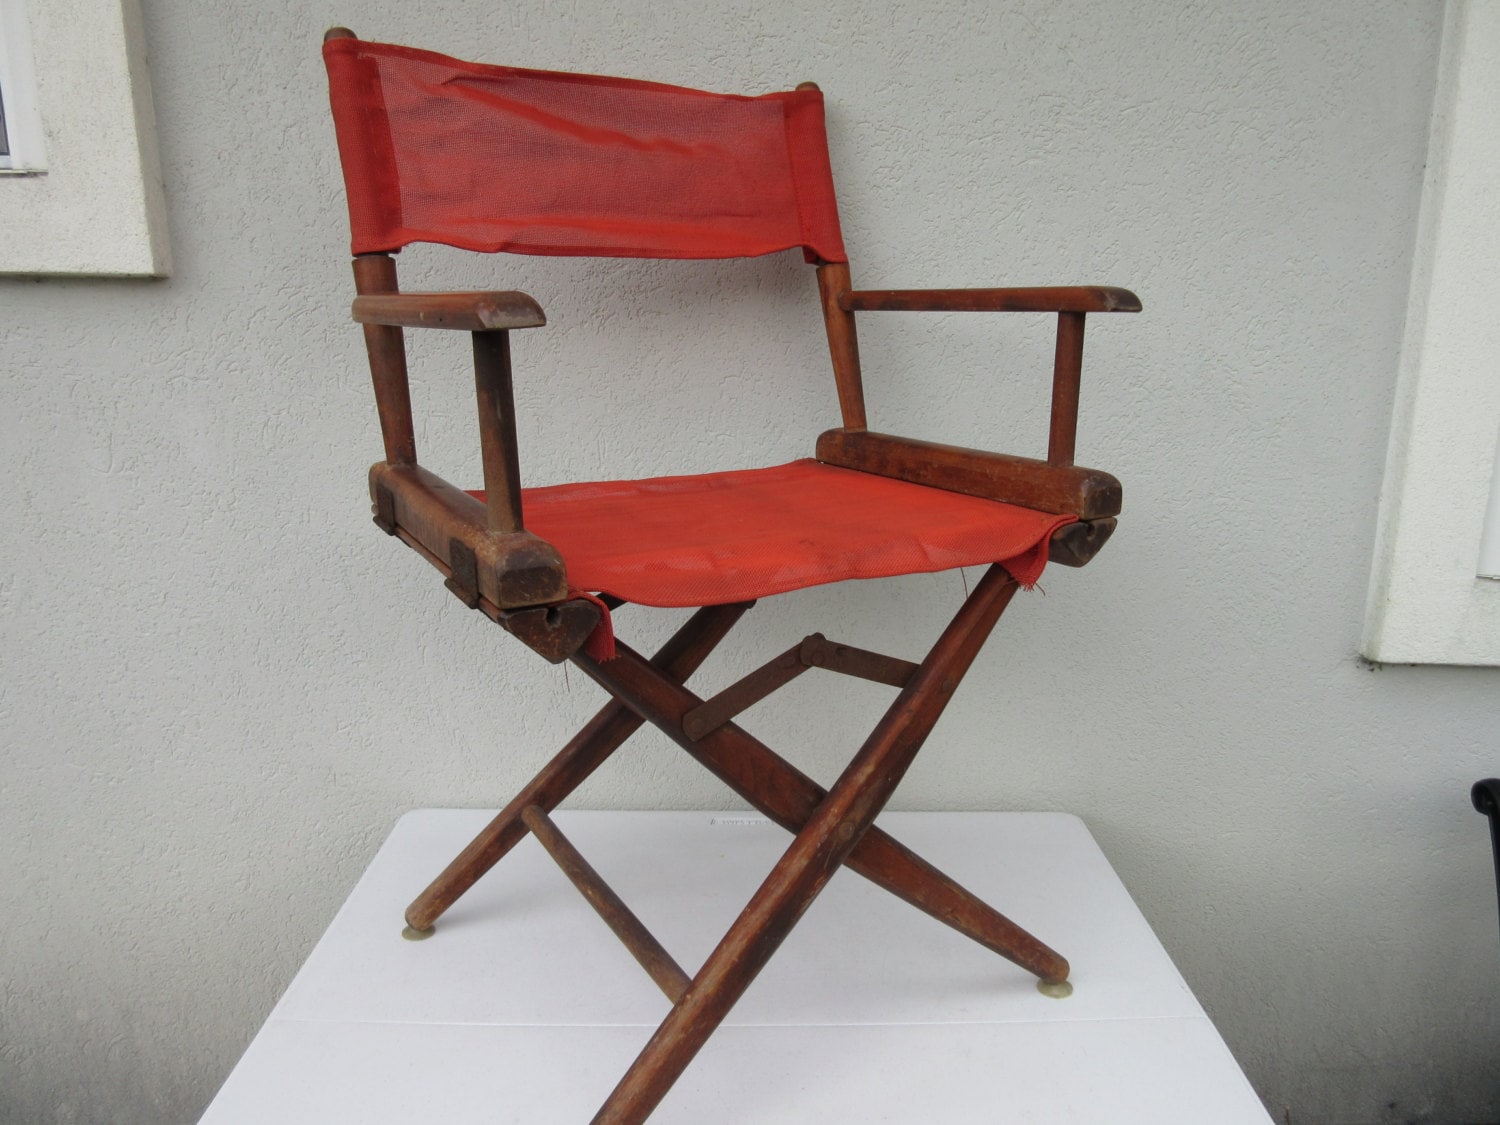 Vintage,Telescope, folding orange and brown wood Chair,Nautical,Boat Telescope Folding Furniture Company Vintage